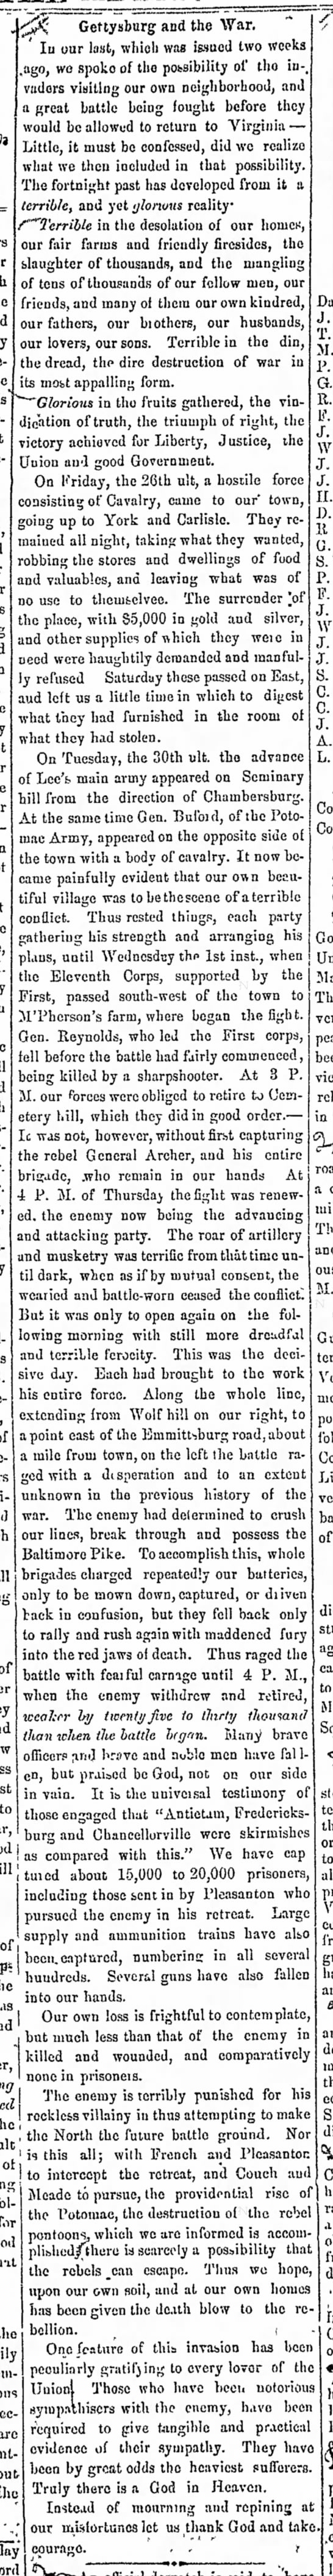 Gettysburg newspaper reports on the Battle of Gettysburg on 7 July 1863 - 